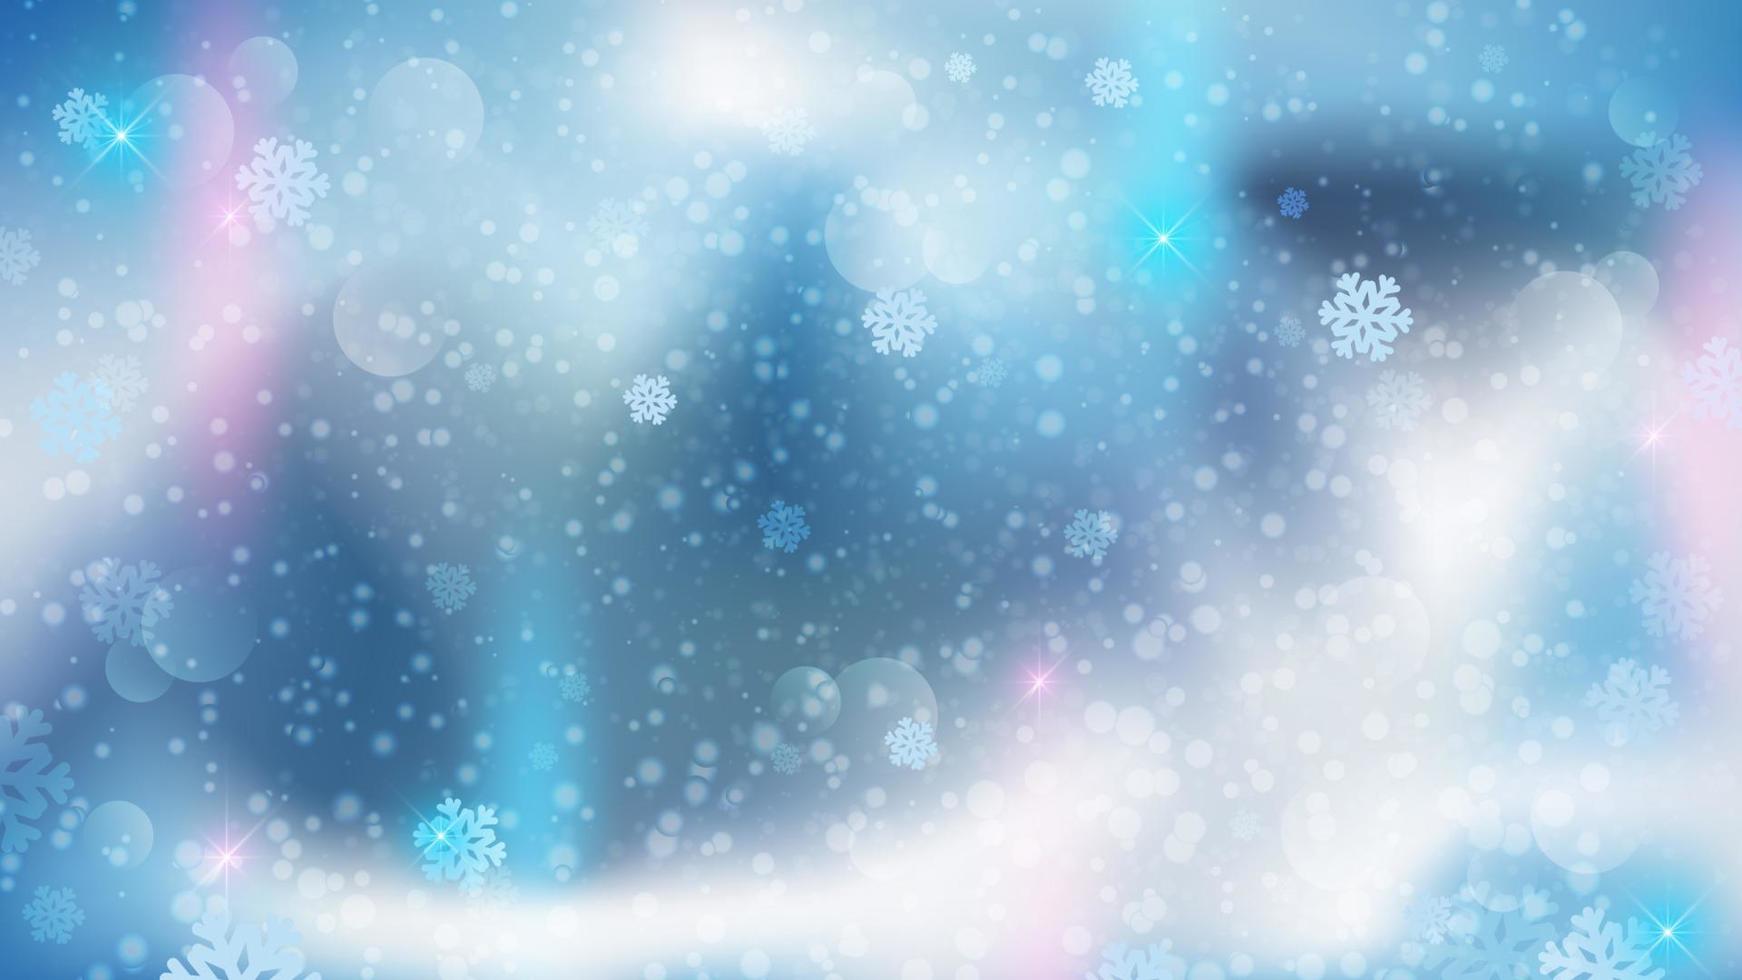 fondo de navidad azul con luces bokeh. auroras boreales. ilustración vectorial vector